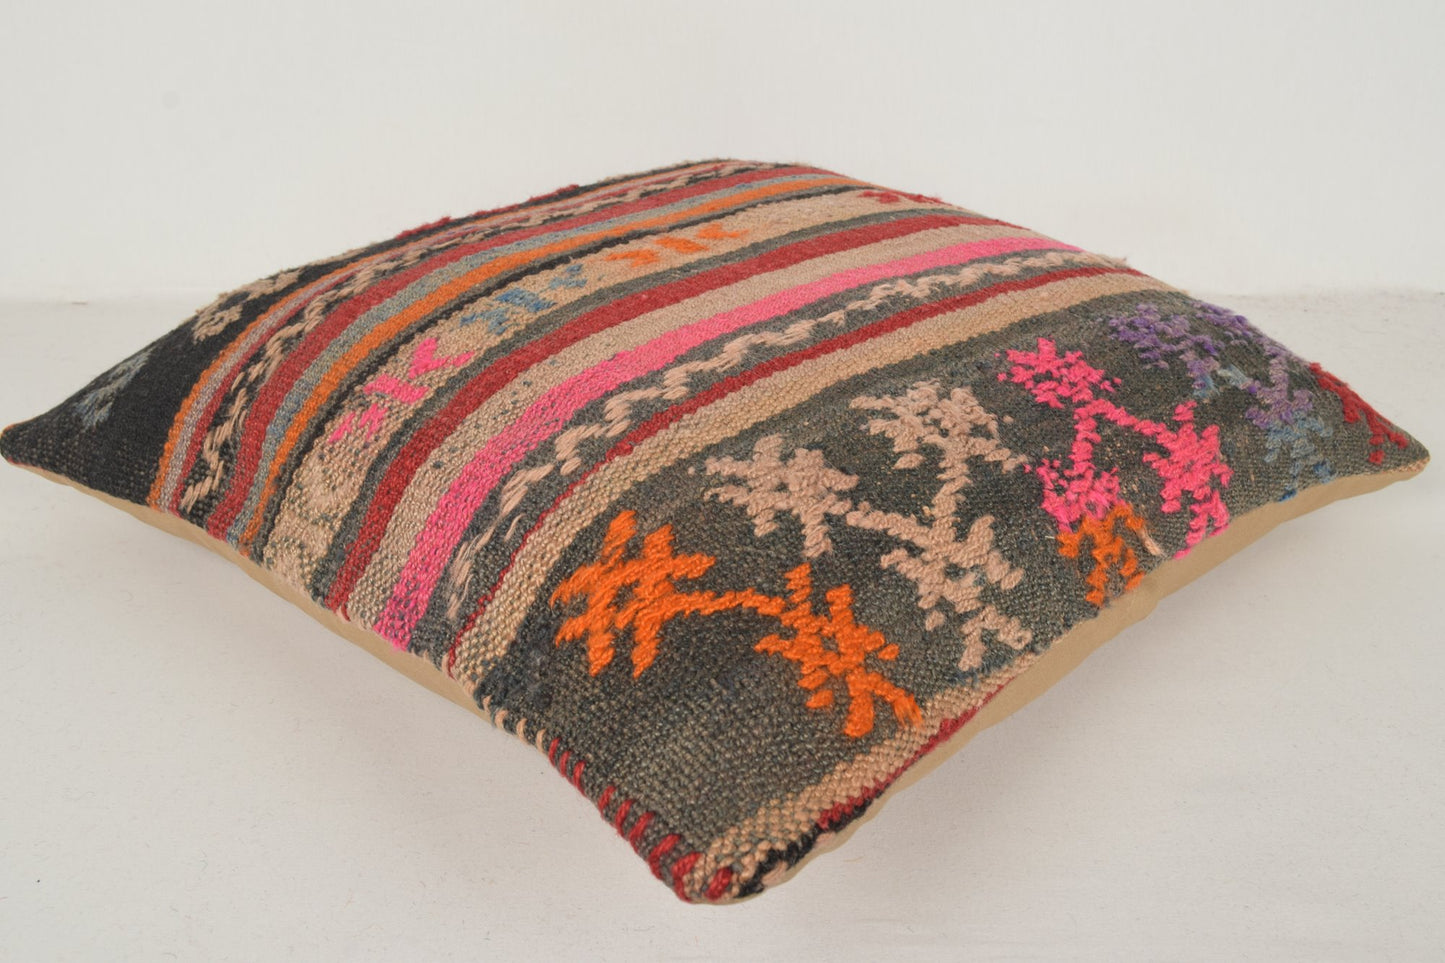 Zara Kilim Rugs Pillows B01670 20x20 Bohemian House Textile